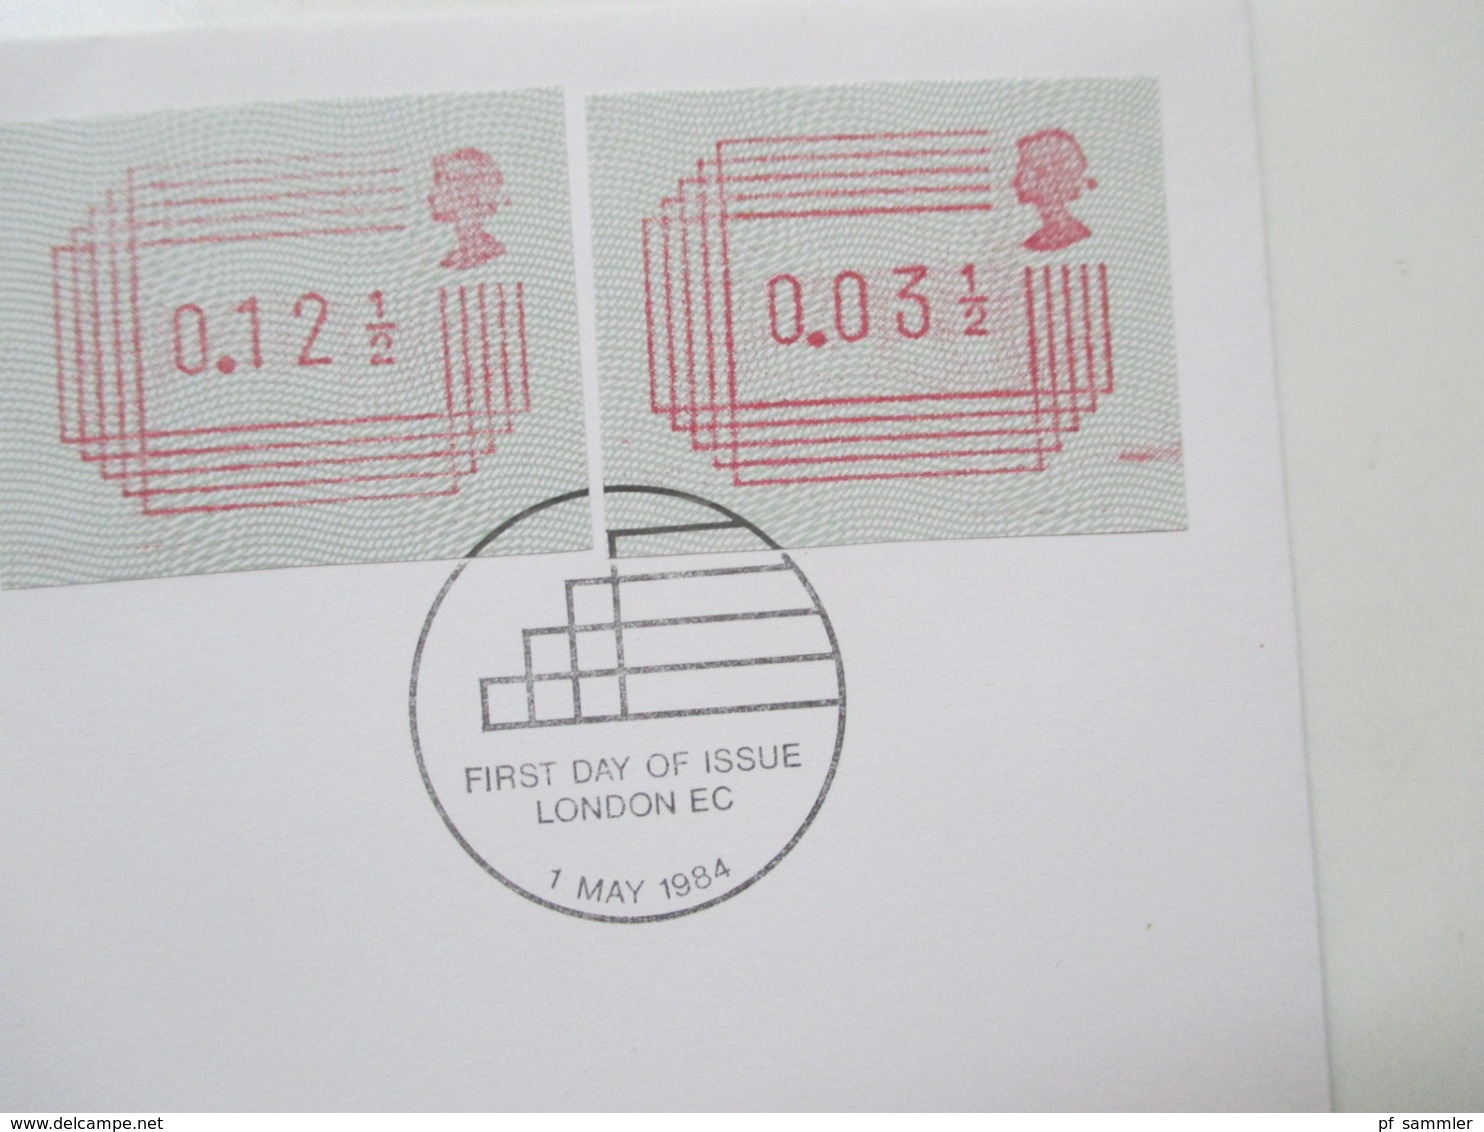 GB ATM 1984 4 Verschiedene FDC / Stempel London, Southampton, Windsor Berks, Cambridge Royal Mail Postage Labels - Covers & Documents